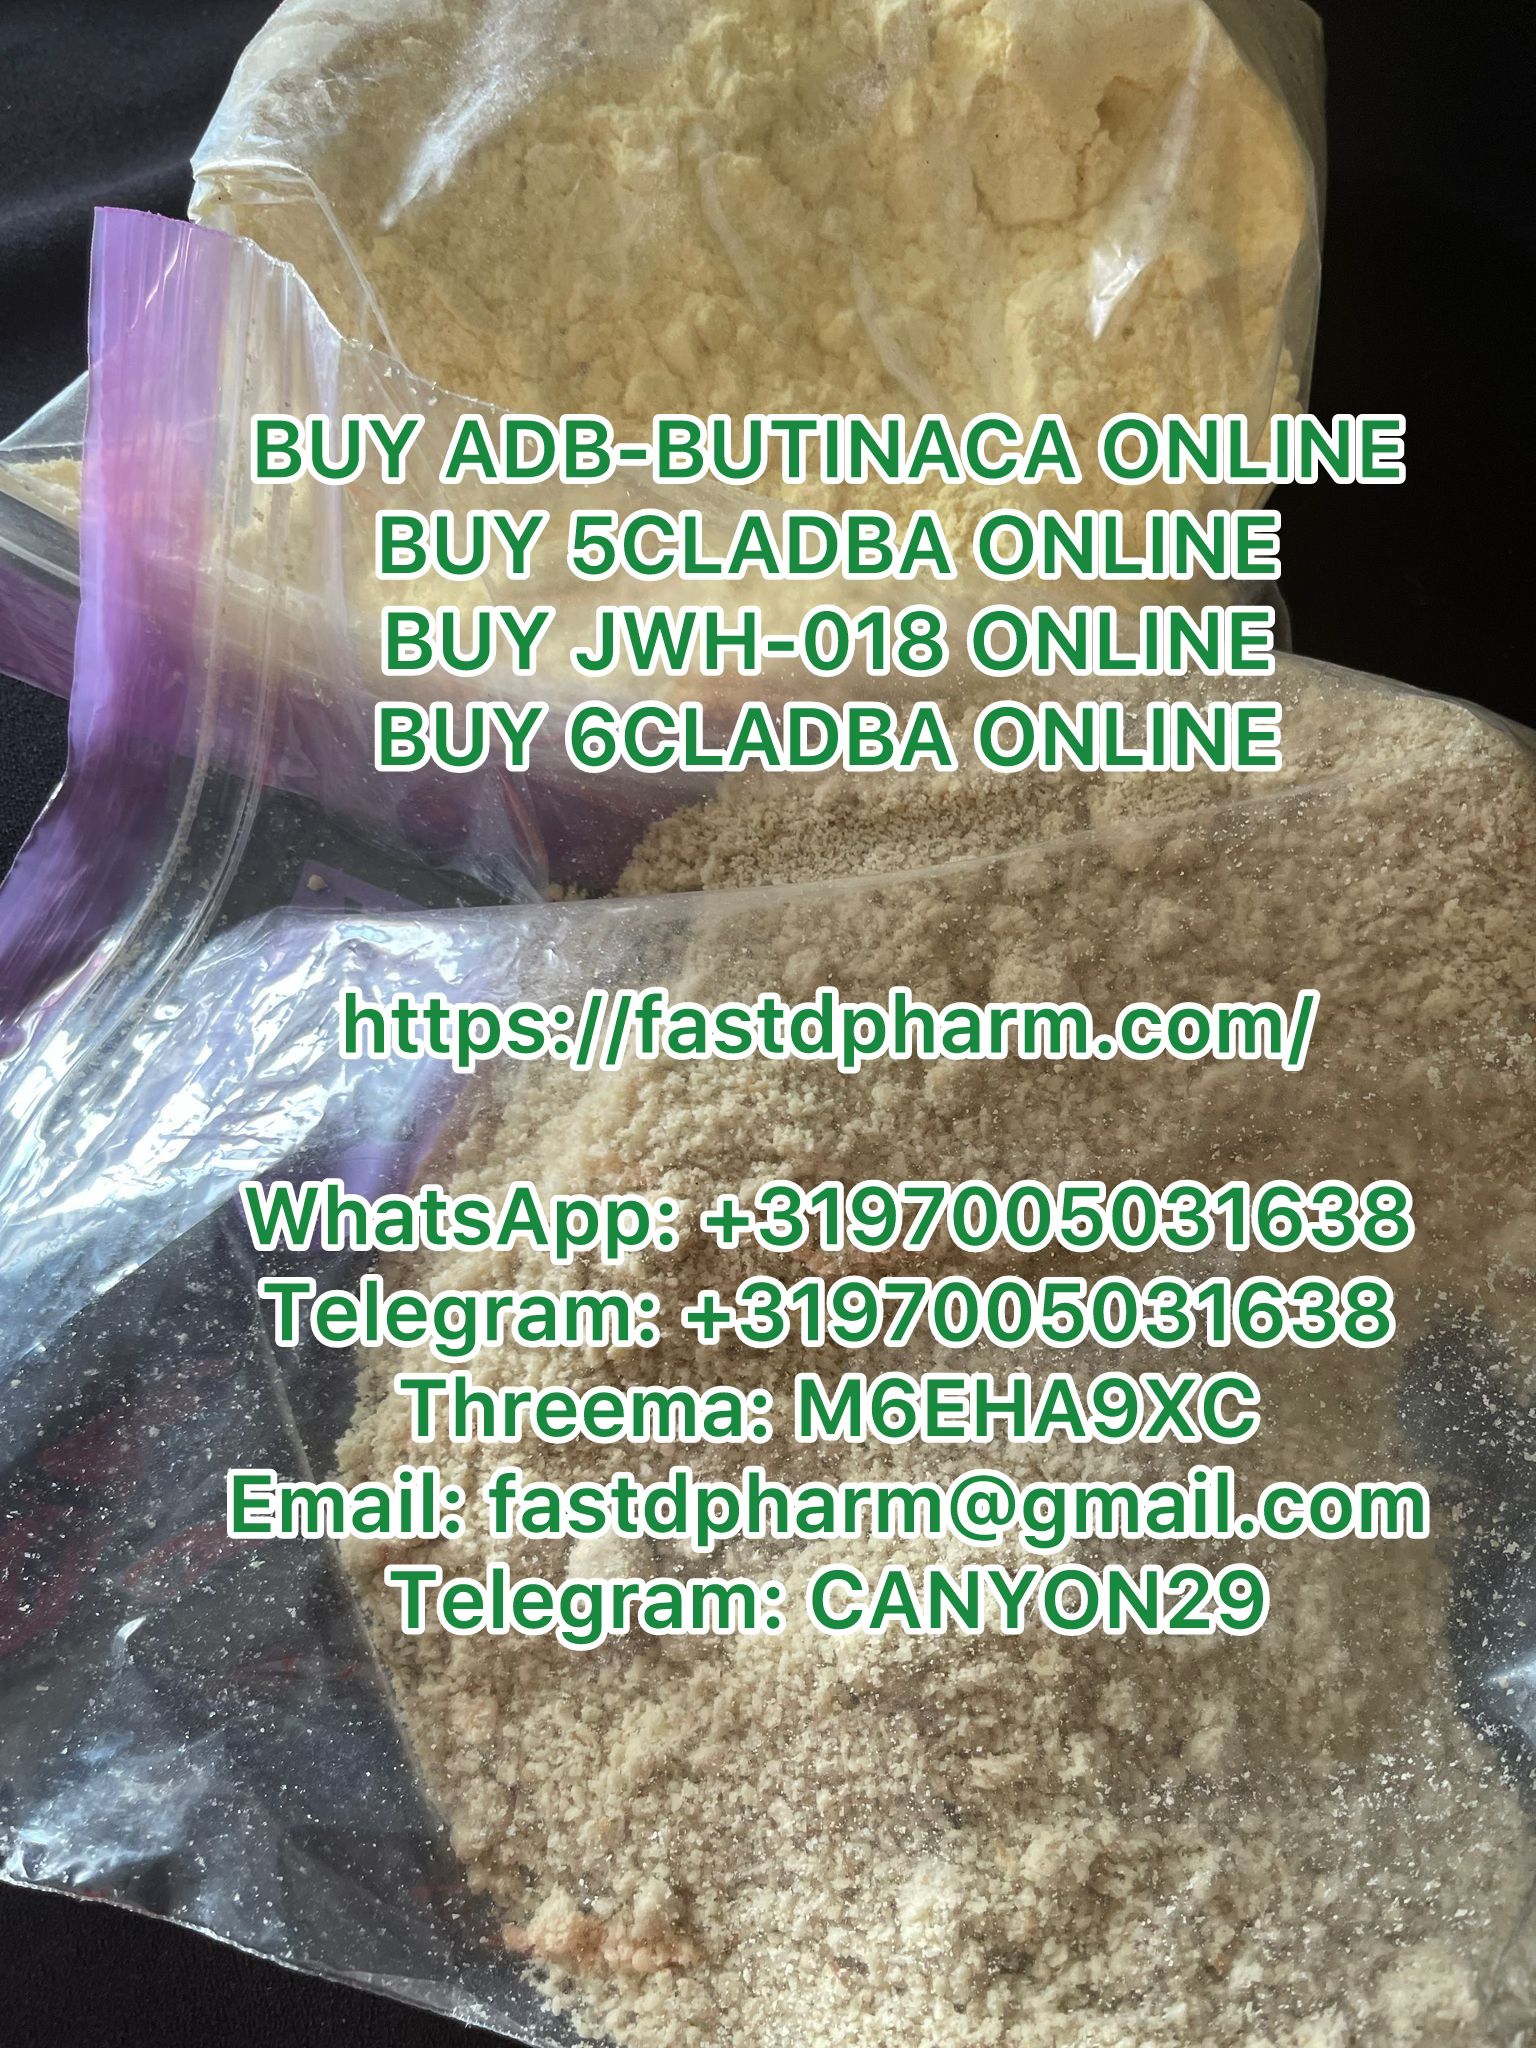 buy-5br-adb-inaca-online-whatsapp-3197005031638-5br-adb-inaca-for-sale-online-buy-5br-adb-inaca-powder-5br-adbb-adb-5br-binaca-adb-but-5br-inaca-buy-5br-adb-butinaca-113360